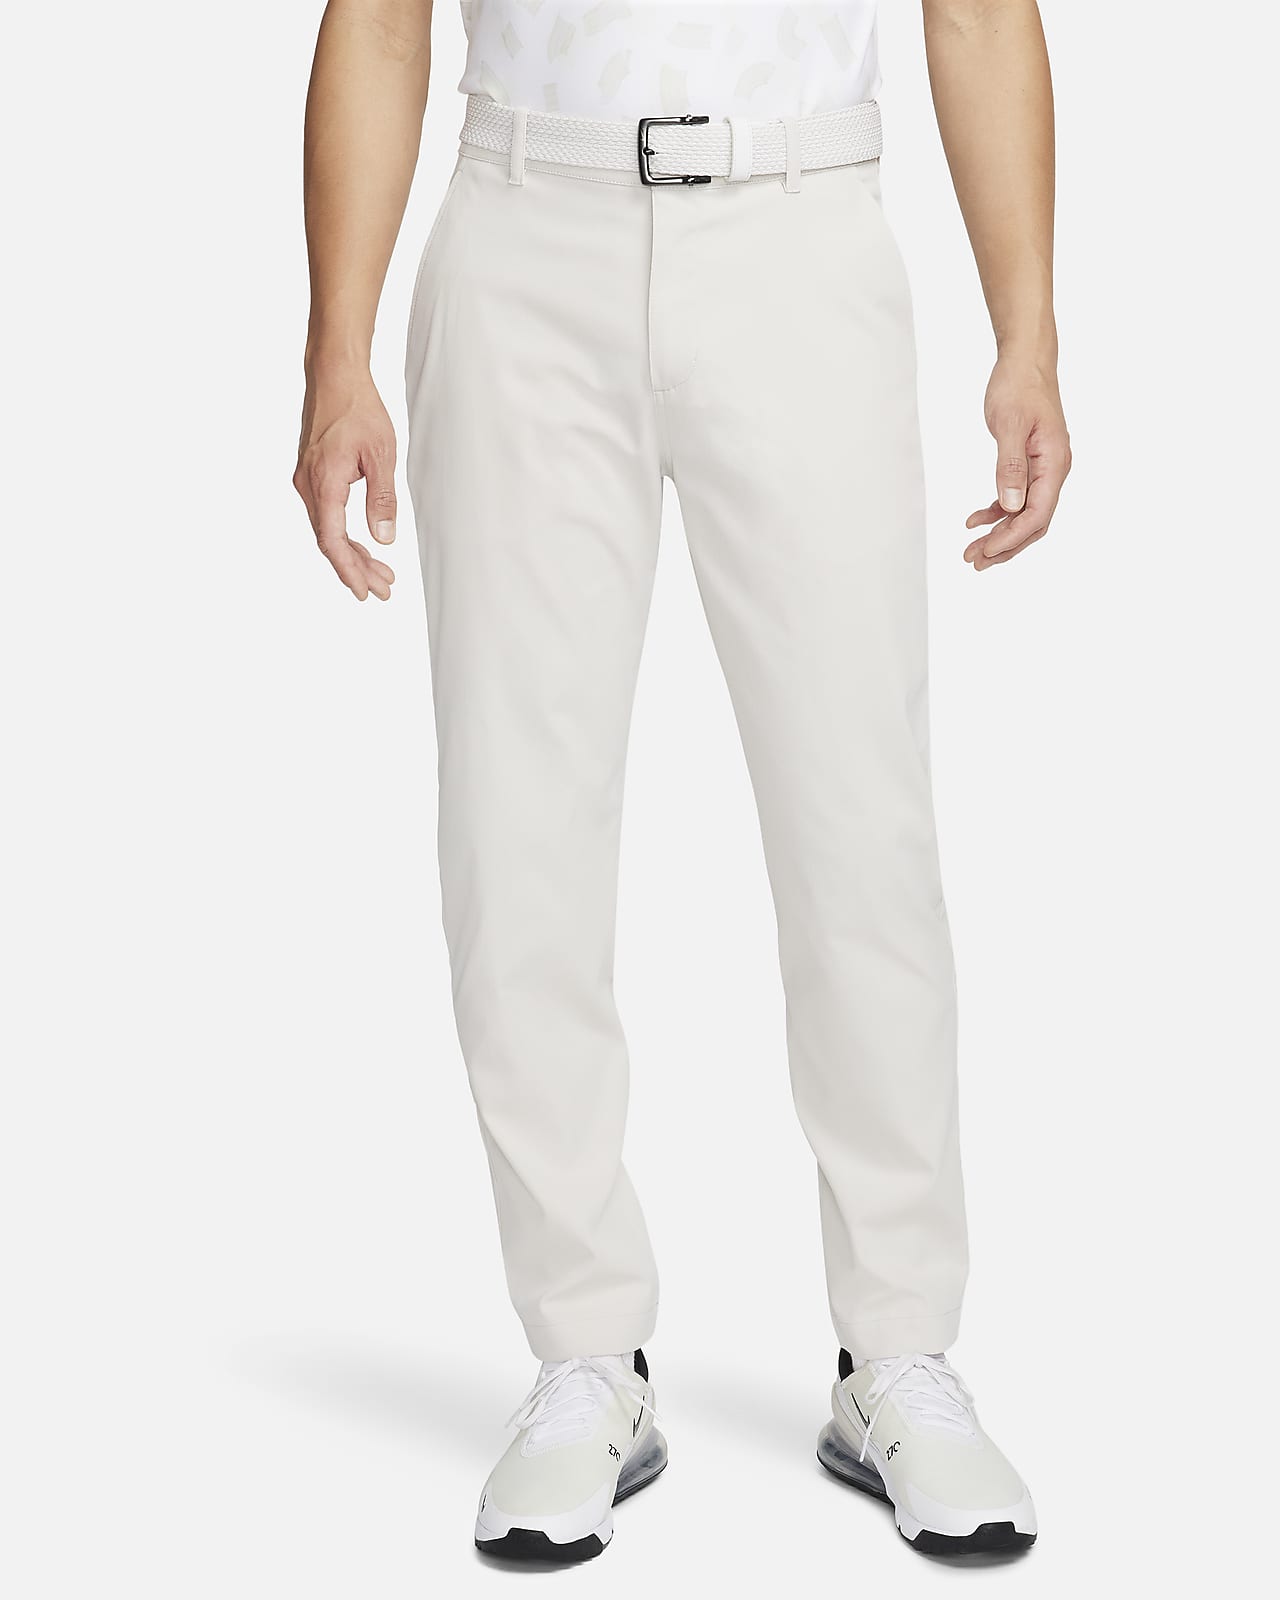 Nike Tour Repel Men's Chino Golf Trousers